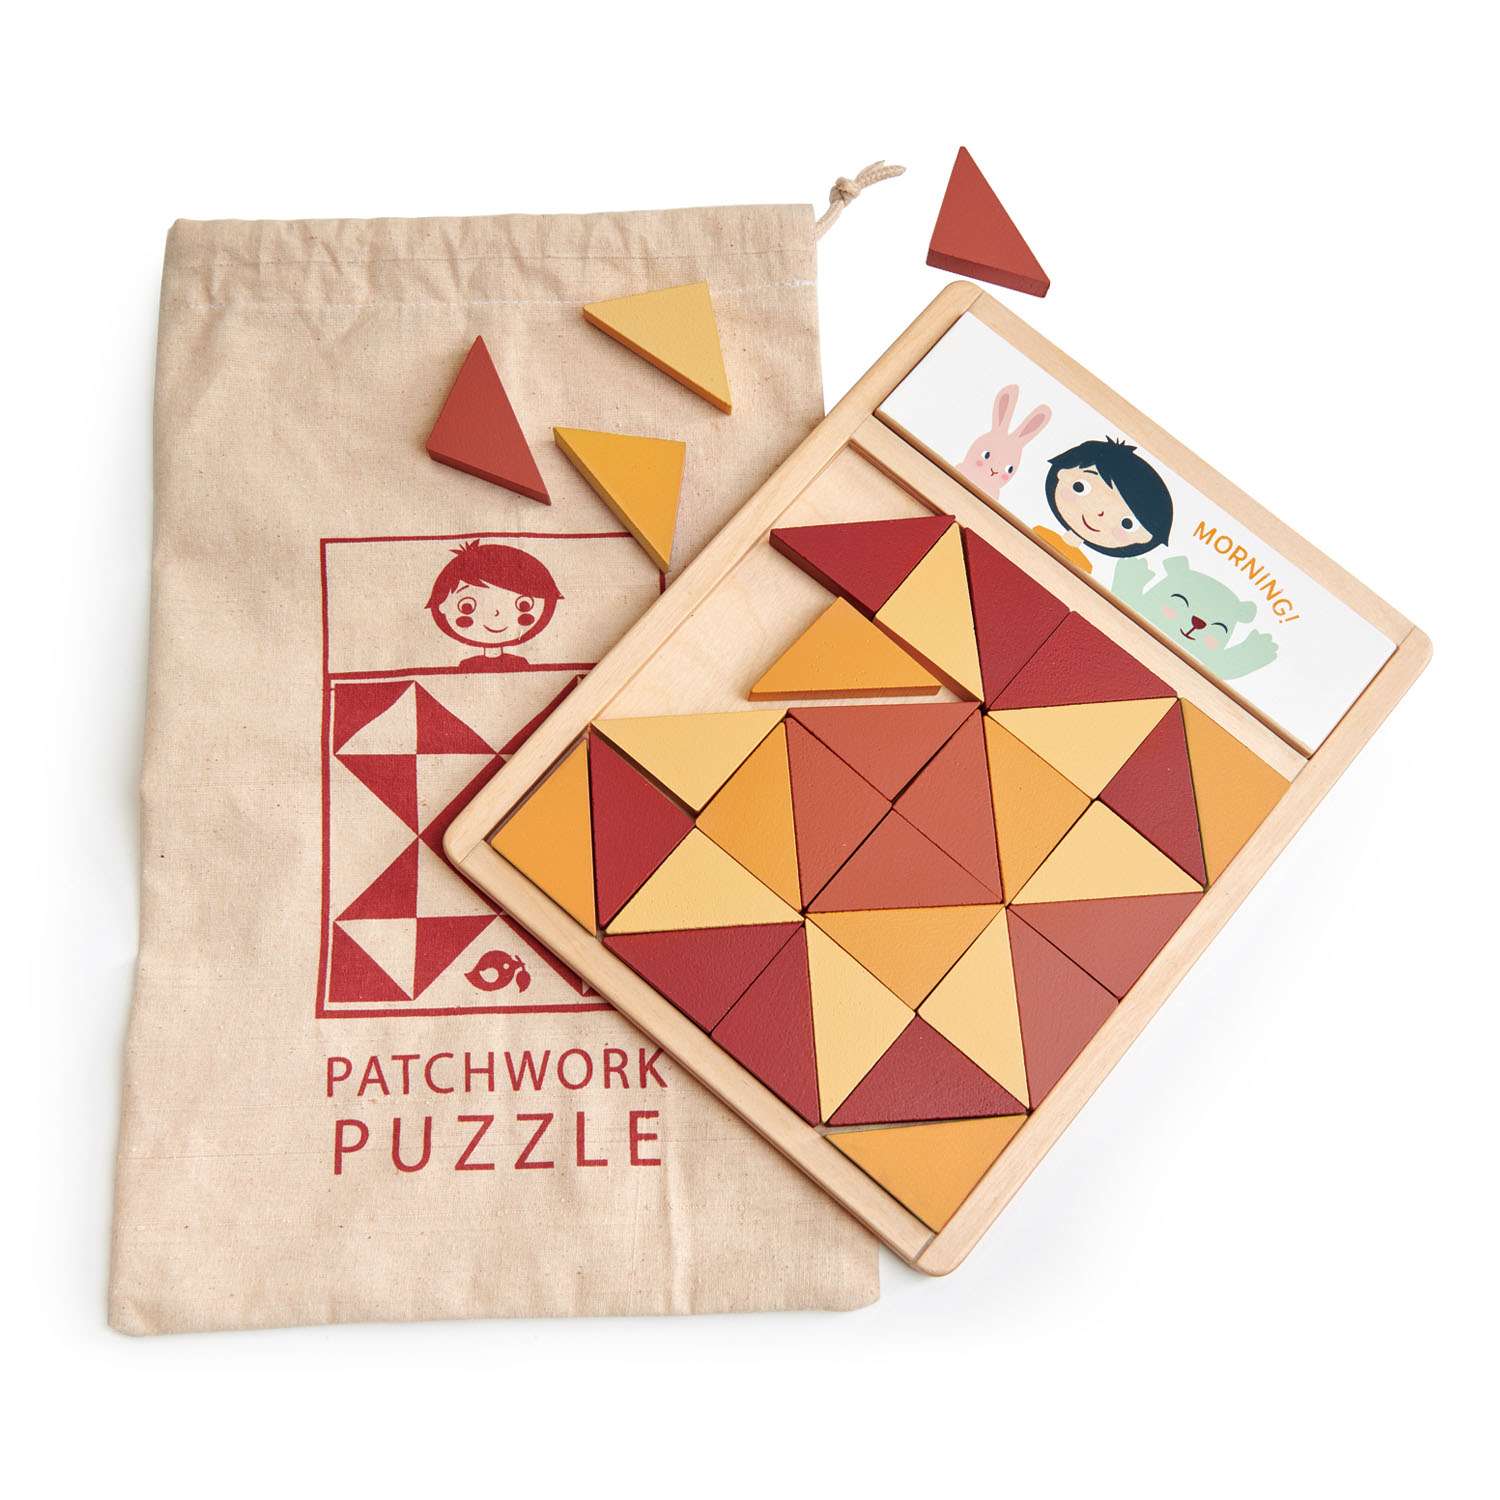 Tender Leaf Toys ของเล่นไม้ ของเล่นเสริมพัฒนาการ ปริศนาตัวต่อหรรษา Patchwork Quilt Puzzle